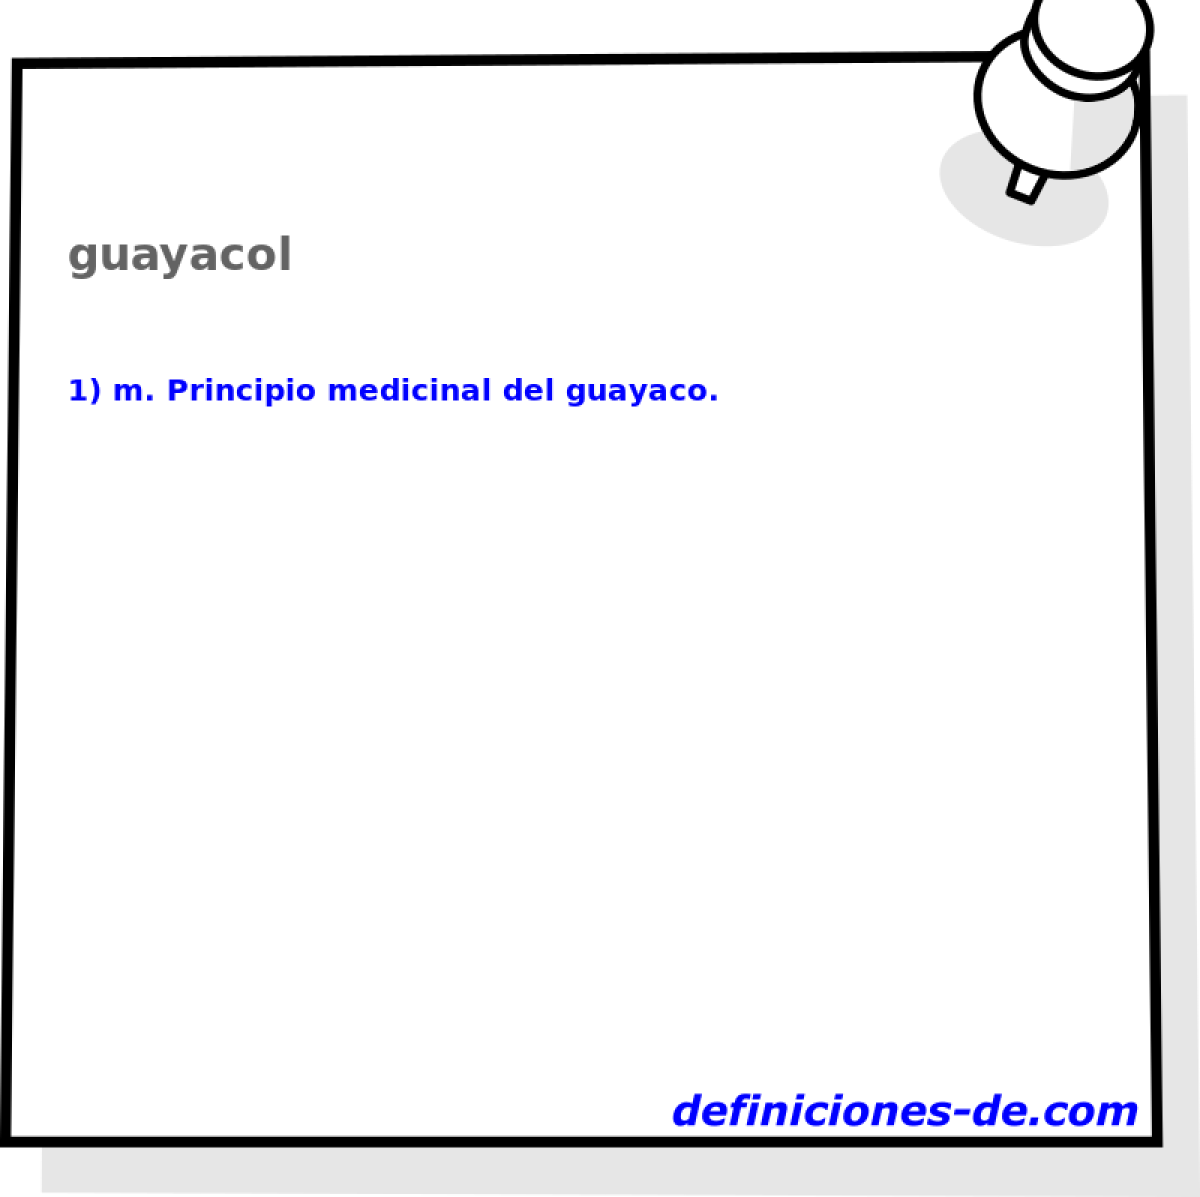 guayacol 